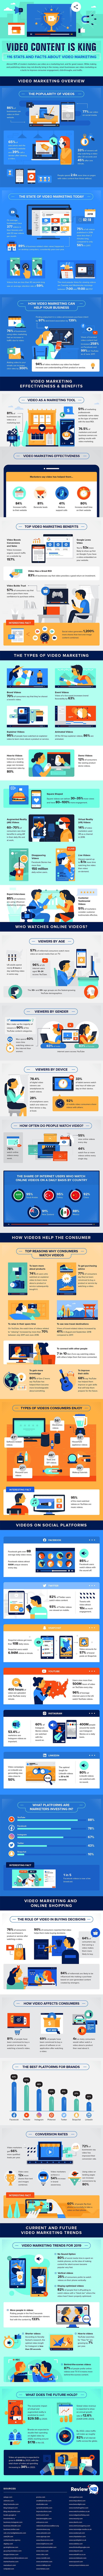 Video-Marketing-Statistics